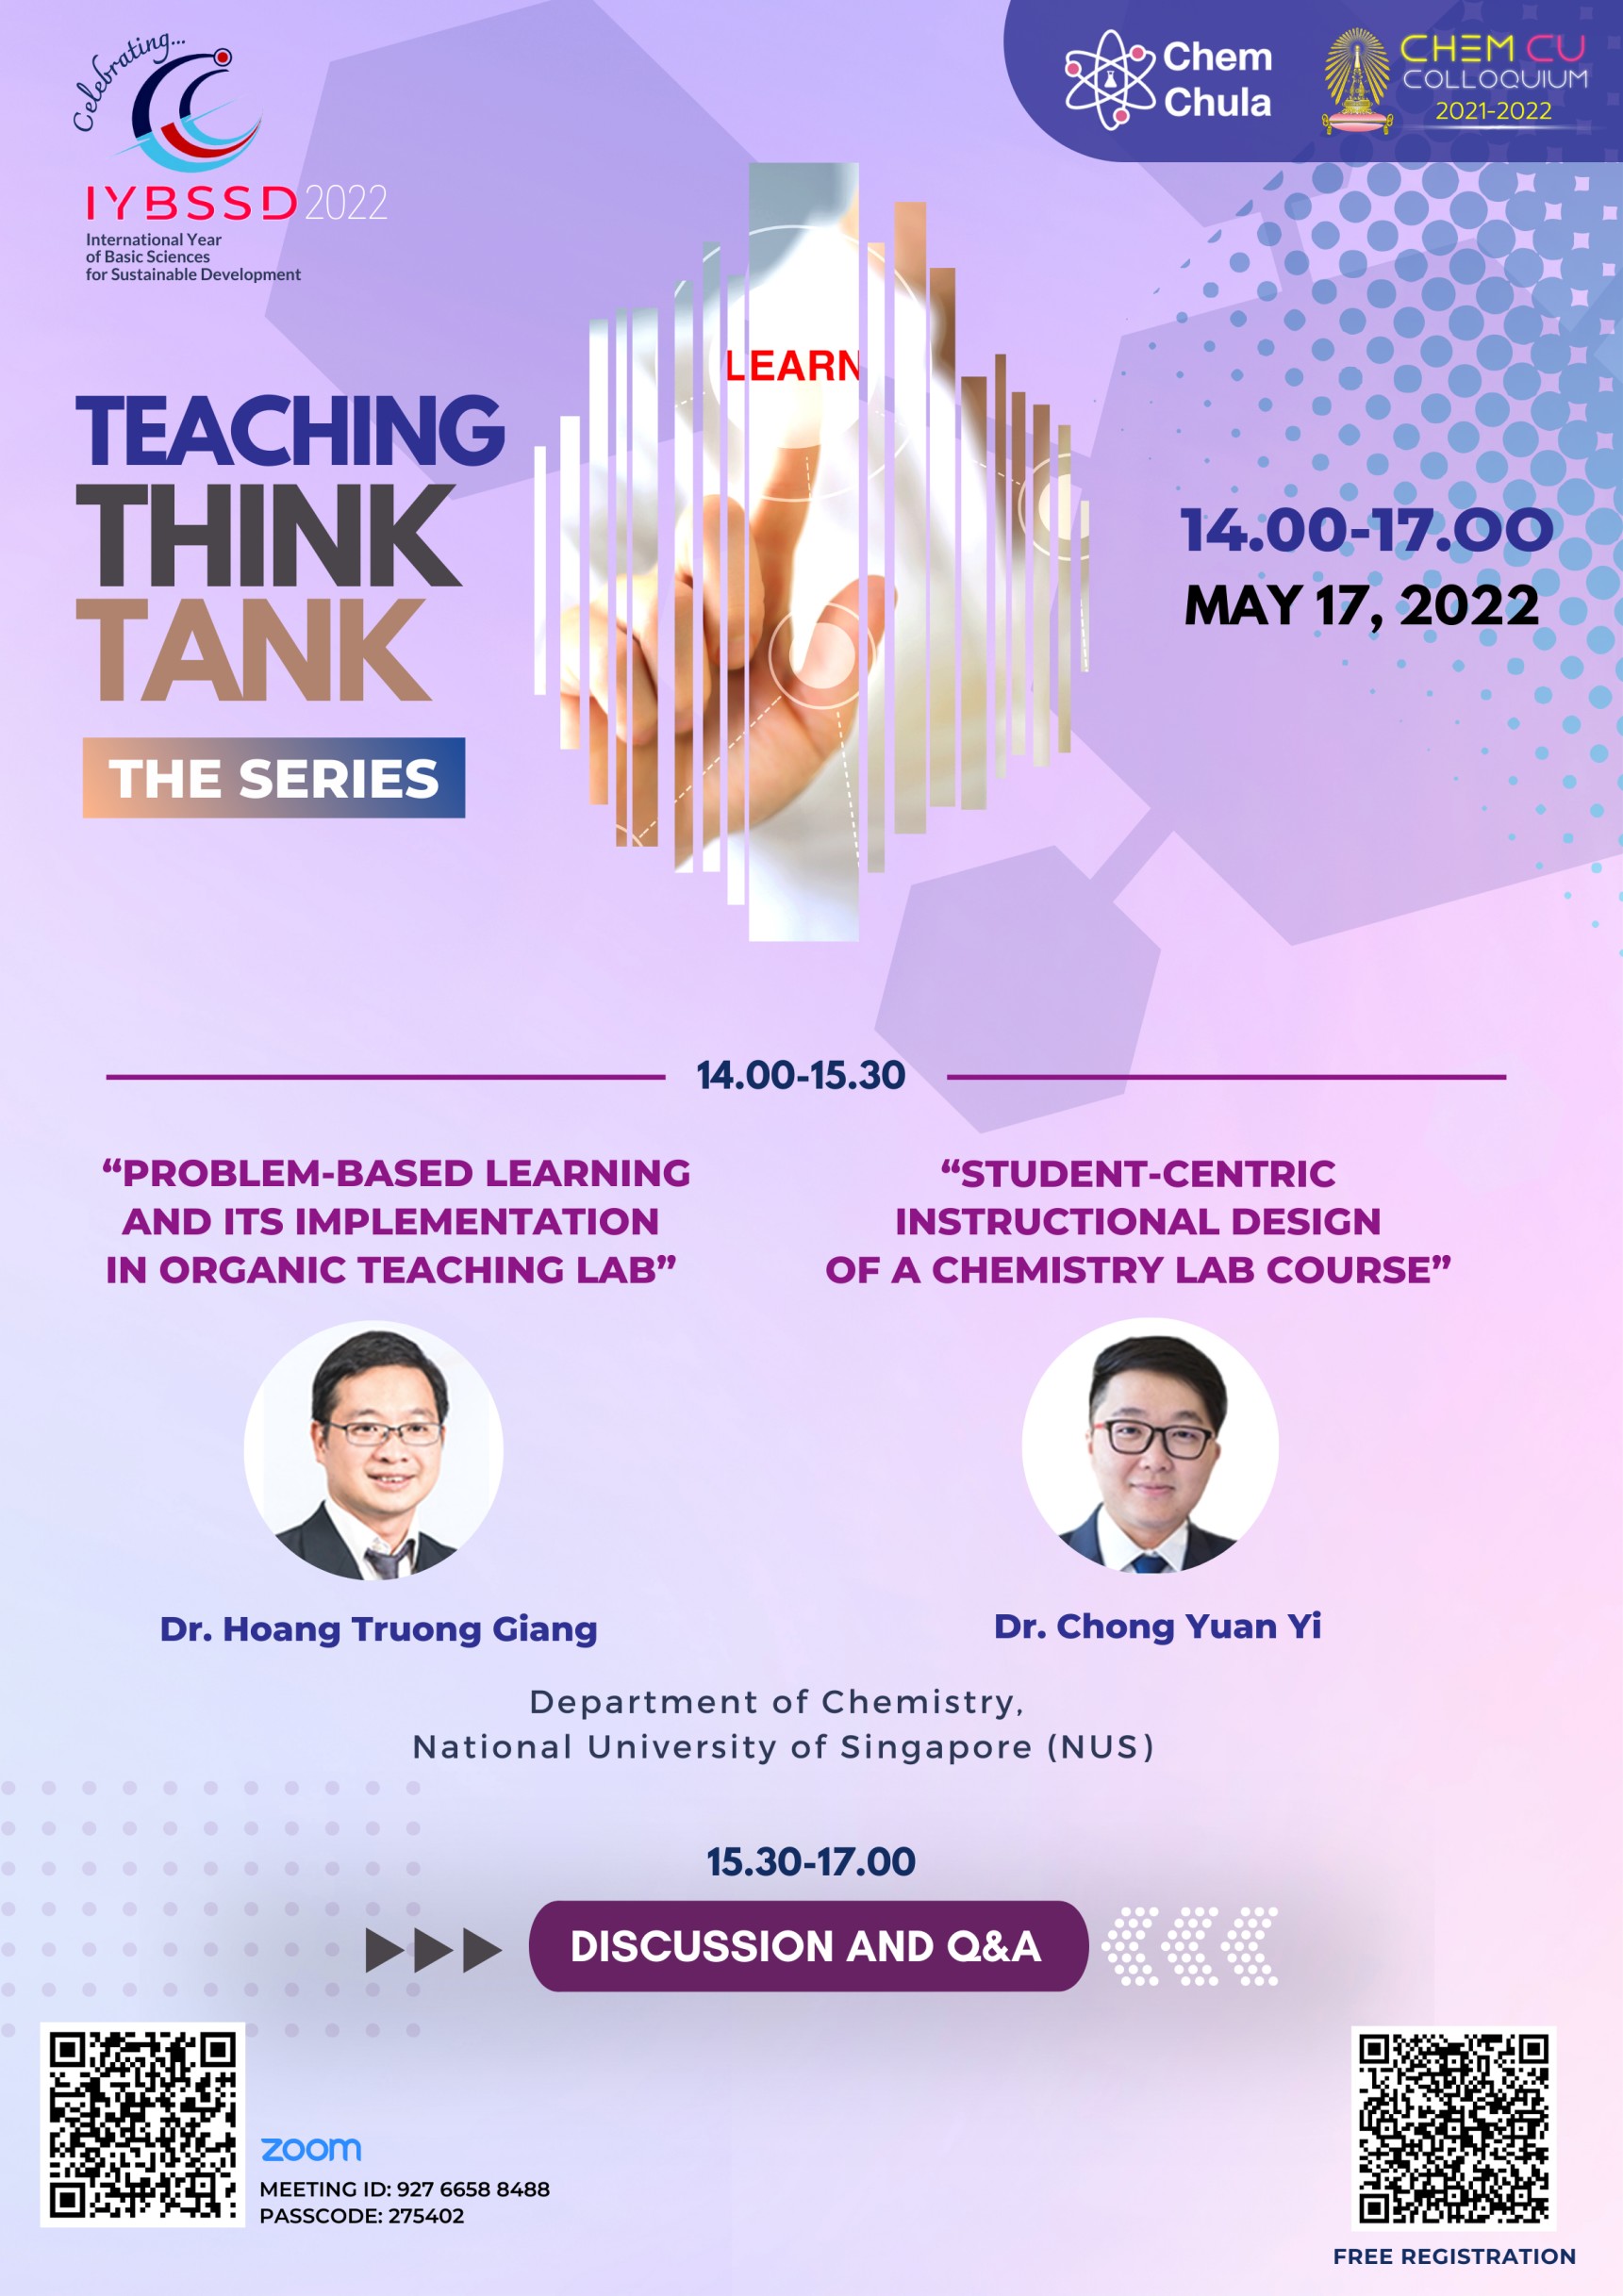 Chulalongkorn University has organized a seminar series Teaching Think Tank